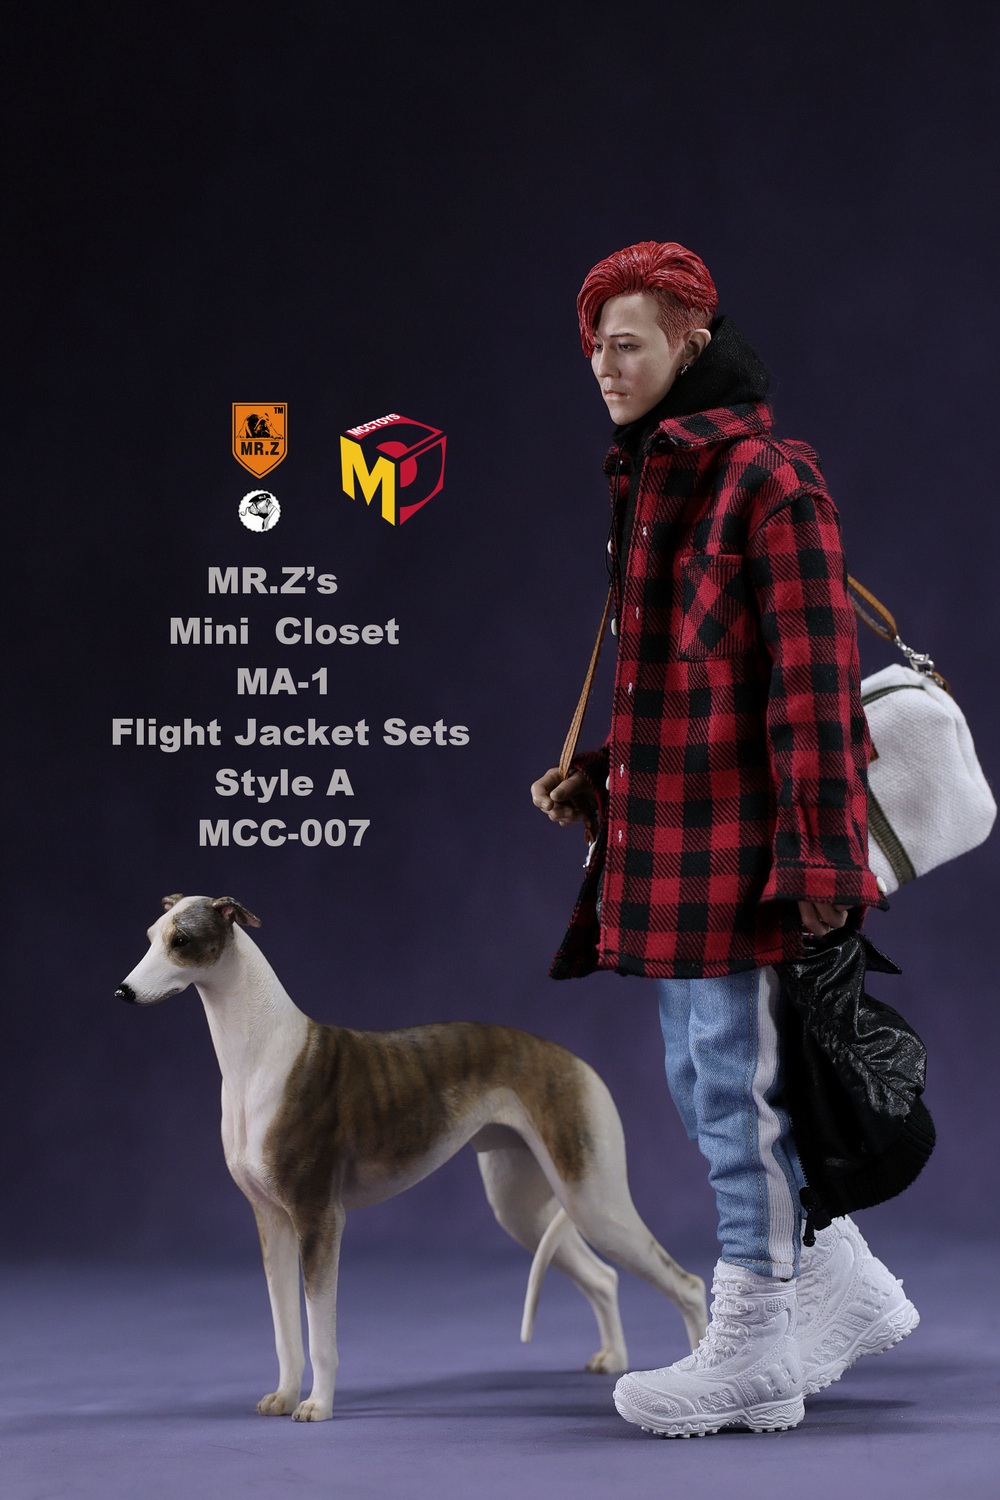 NEW PRODUCT: MCCToys x Mr. Z 1/6 MR.Z's Mini Closet - Flight Jacket sets 723